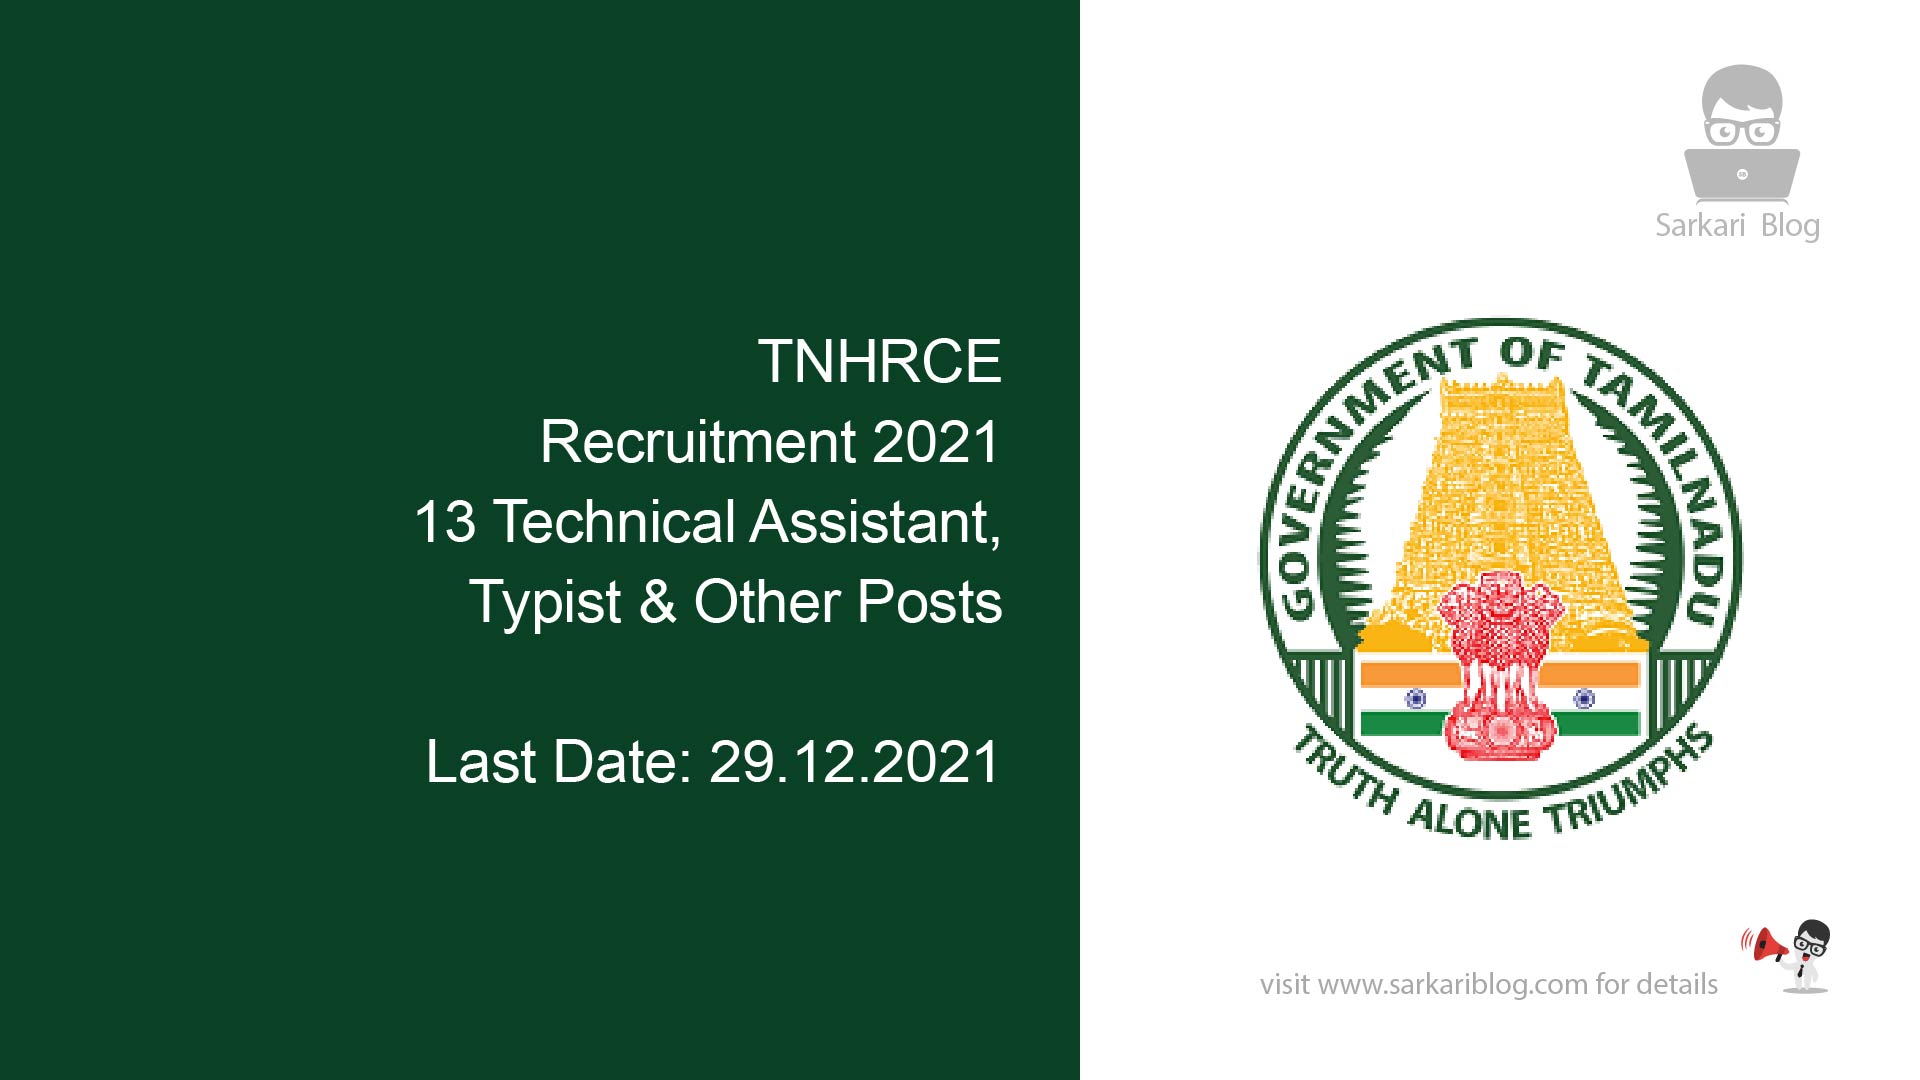 TNHRCE Recruitment 2021